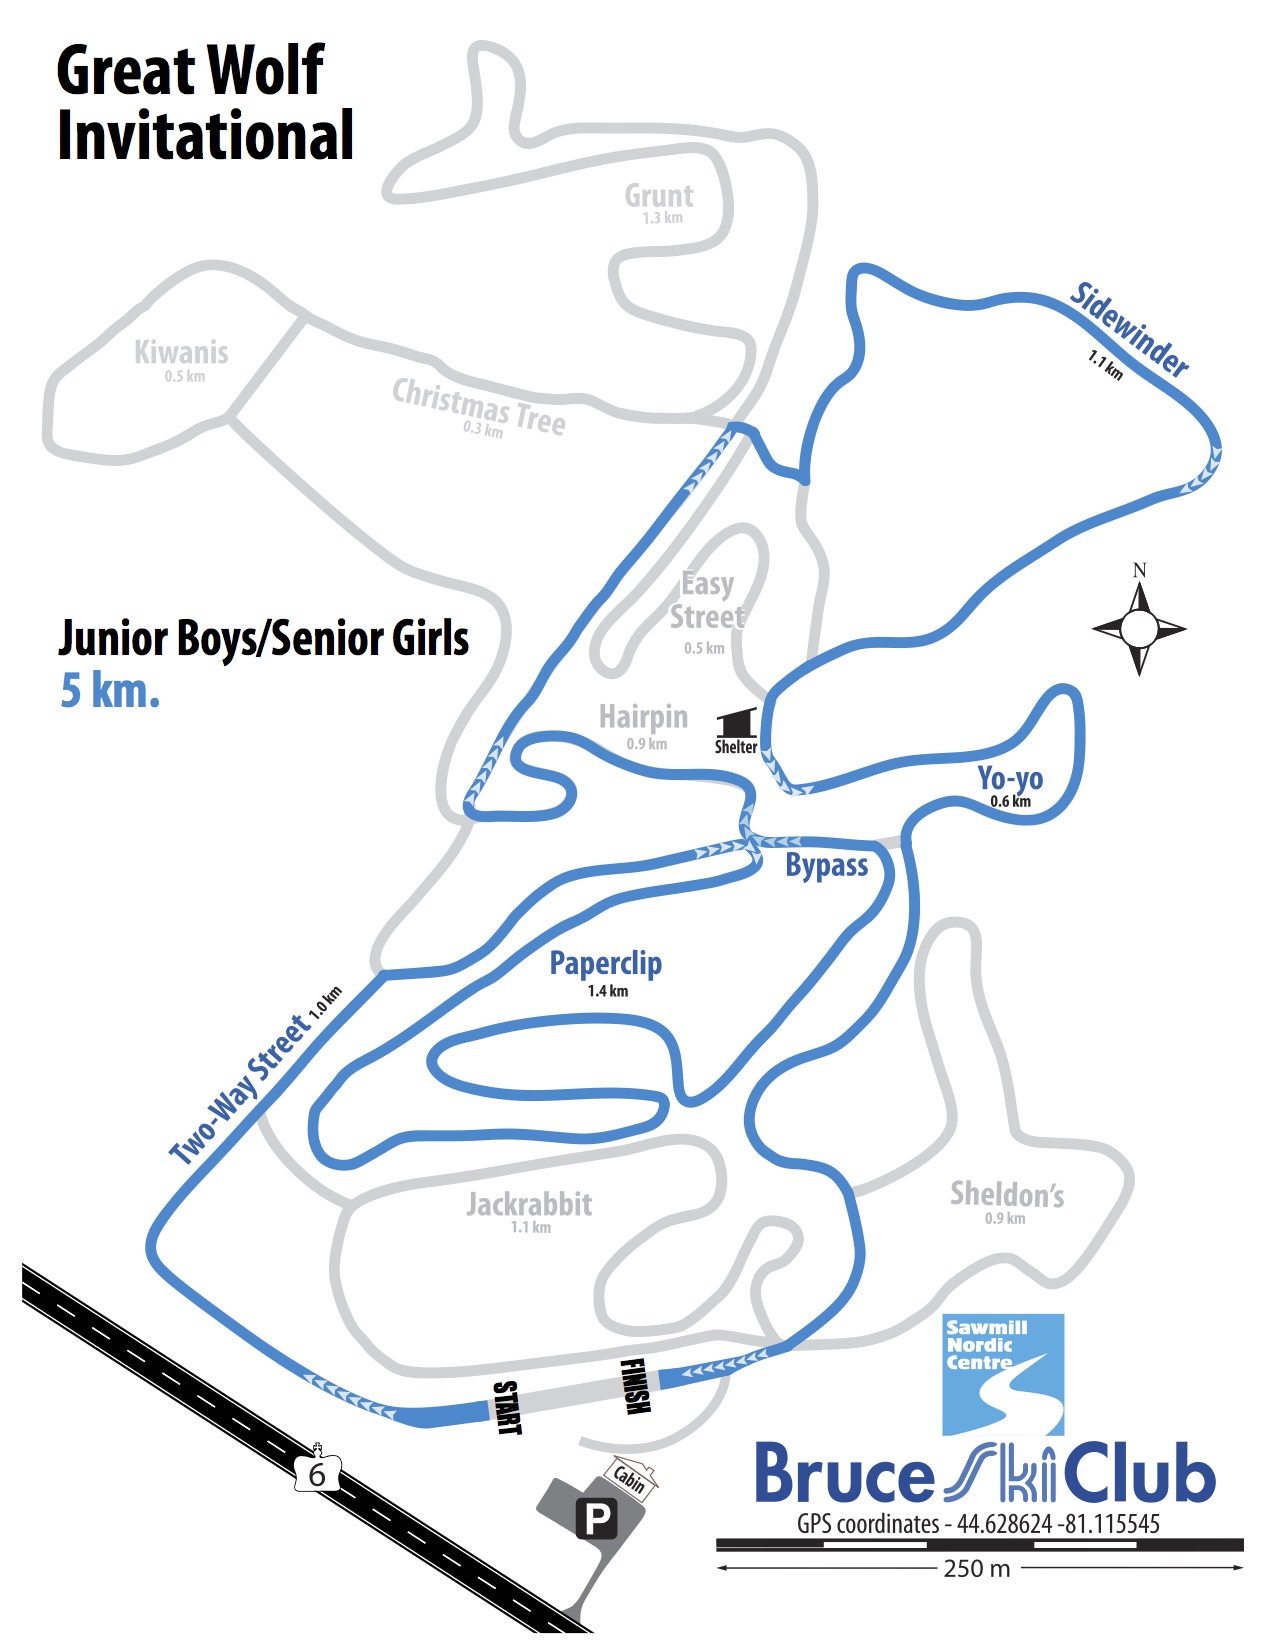 Great Wolf Invitational Cross-Country Ski Race, Hepworth, Ontario - Map: Junior Boys, Senior Girls